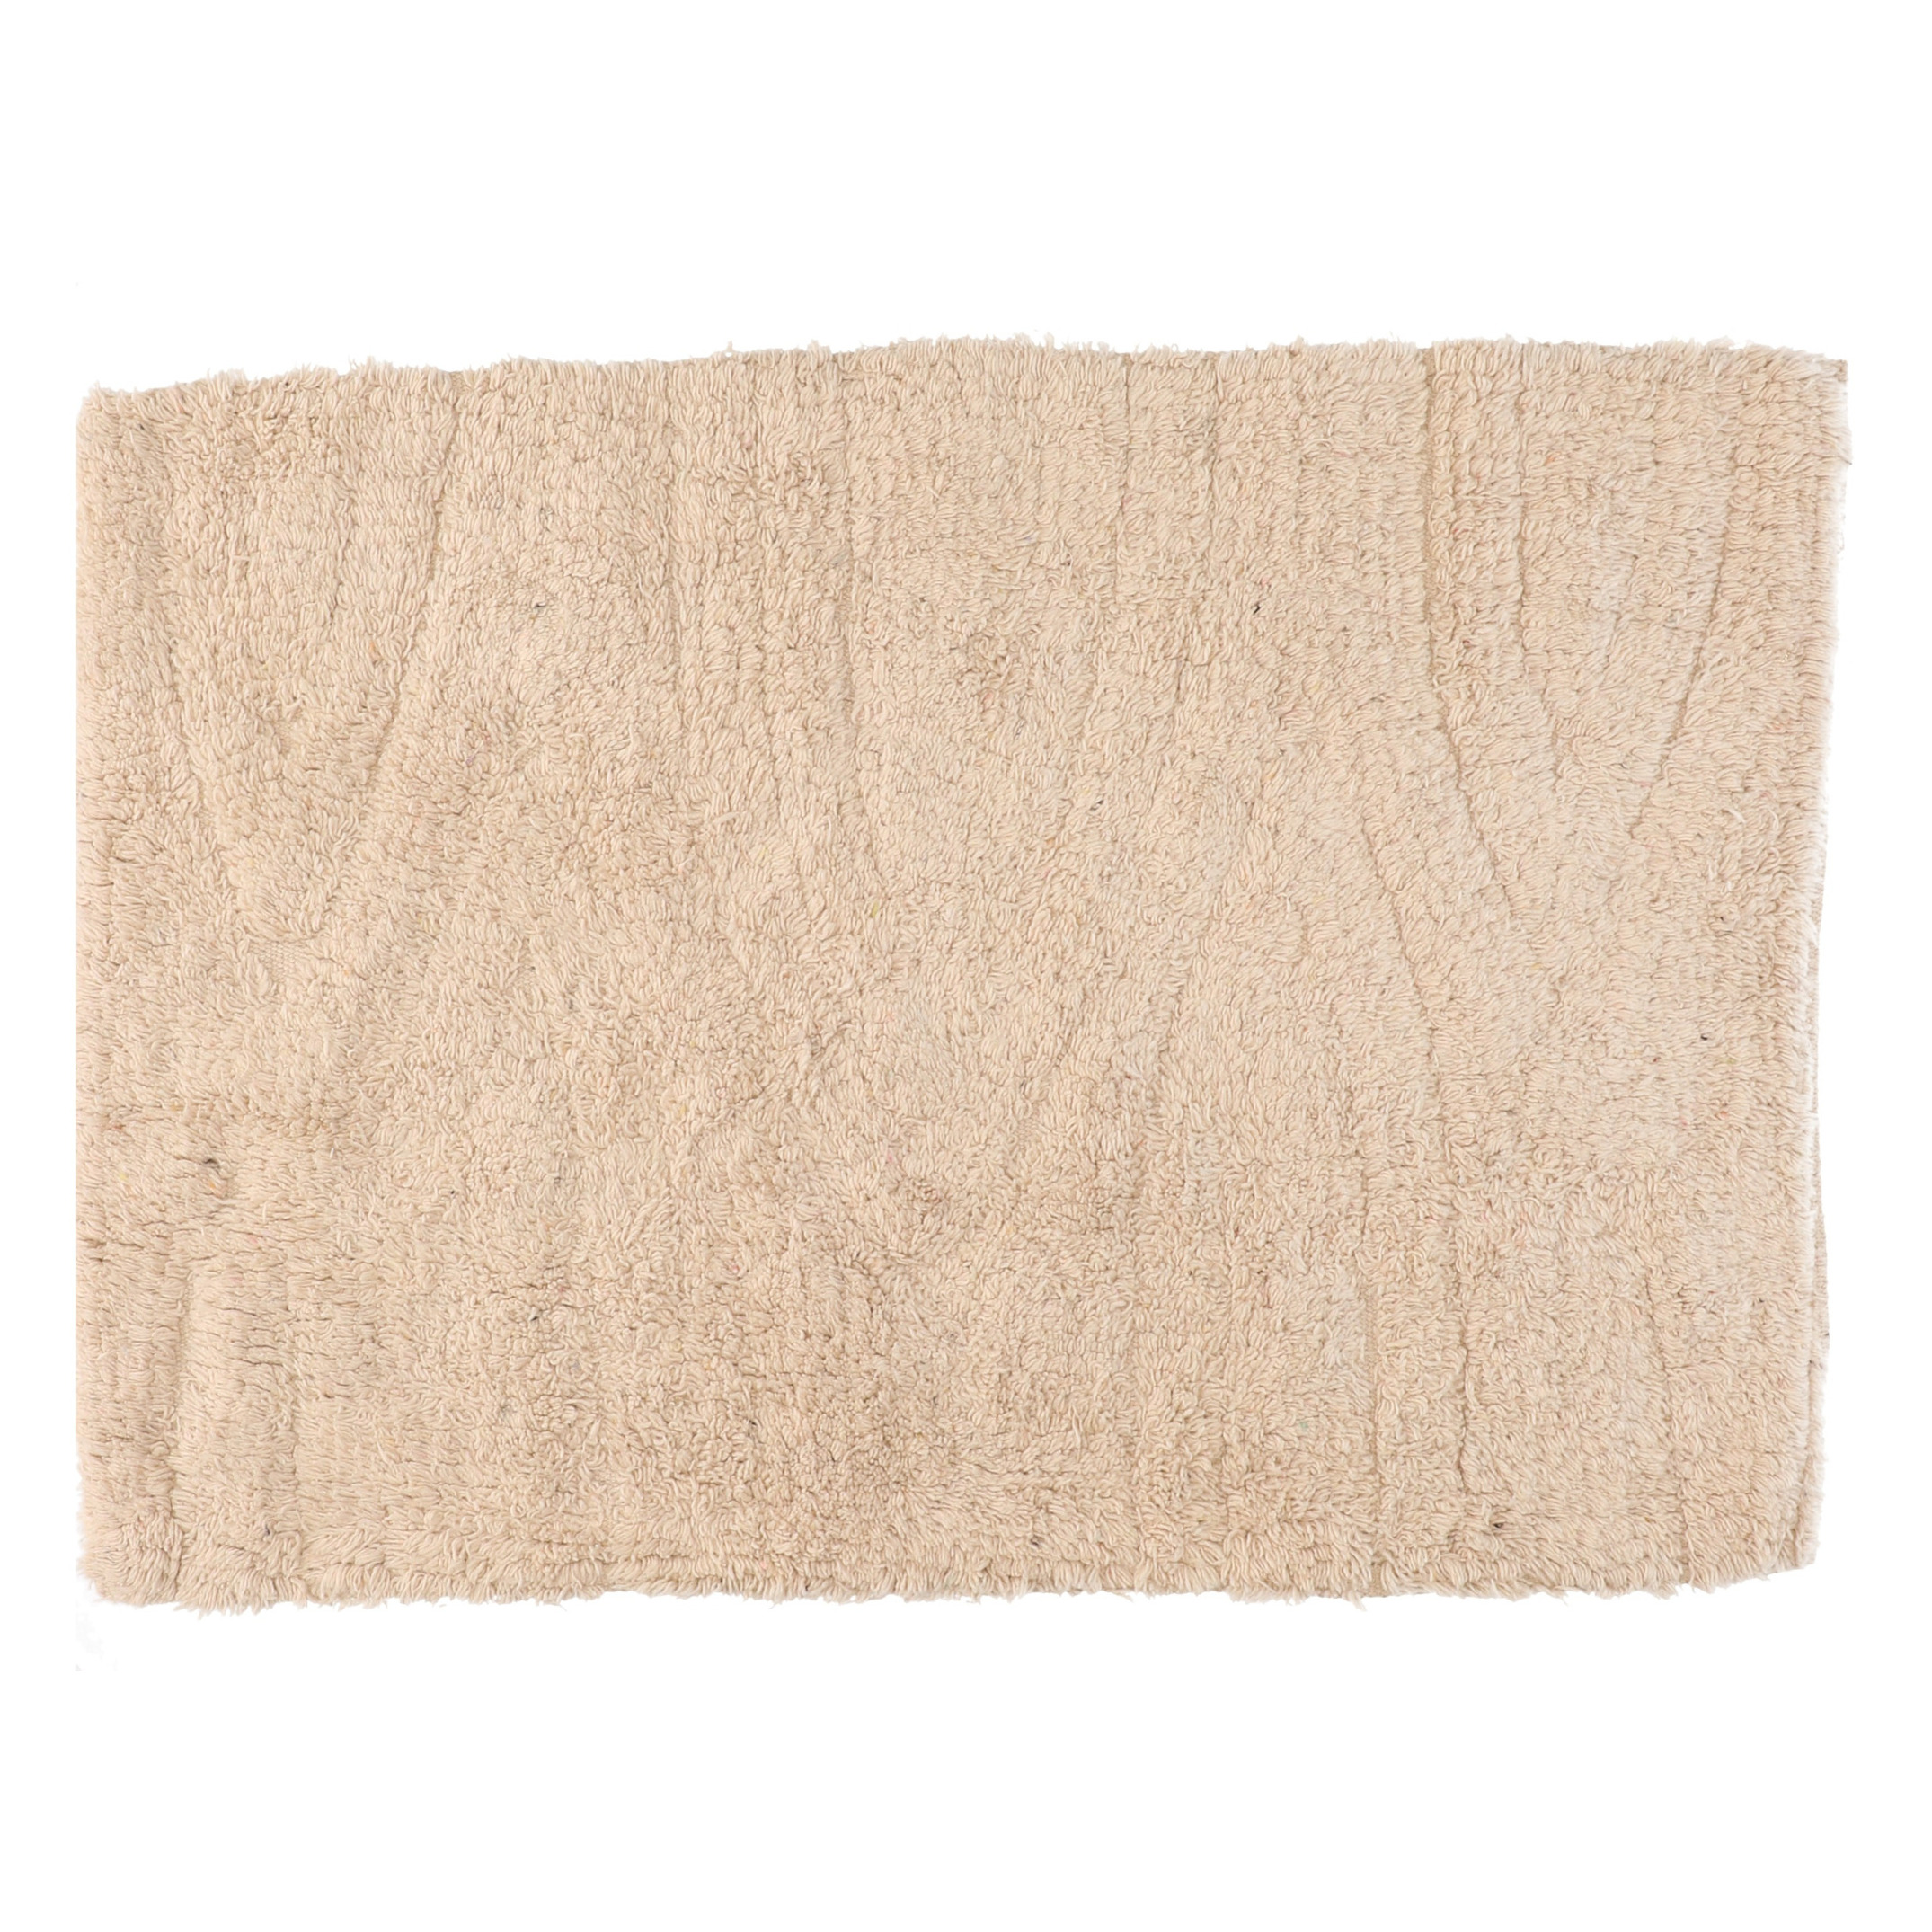 Badmat-badkamerkleed creme wit 80 x 50 cm rechthoekig